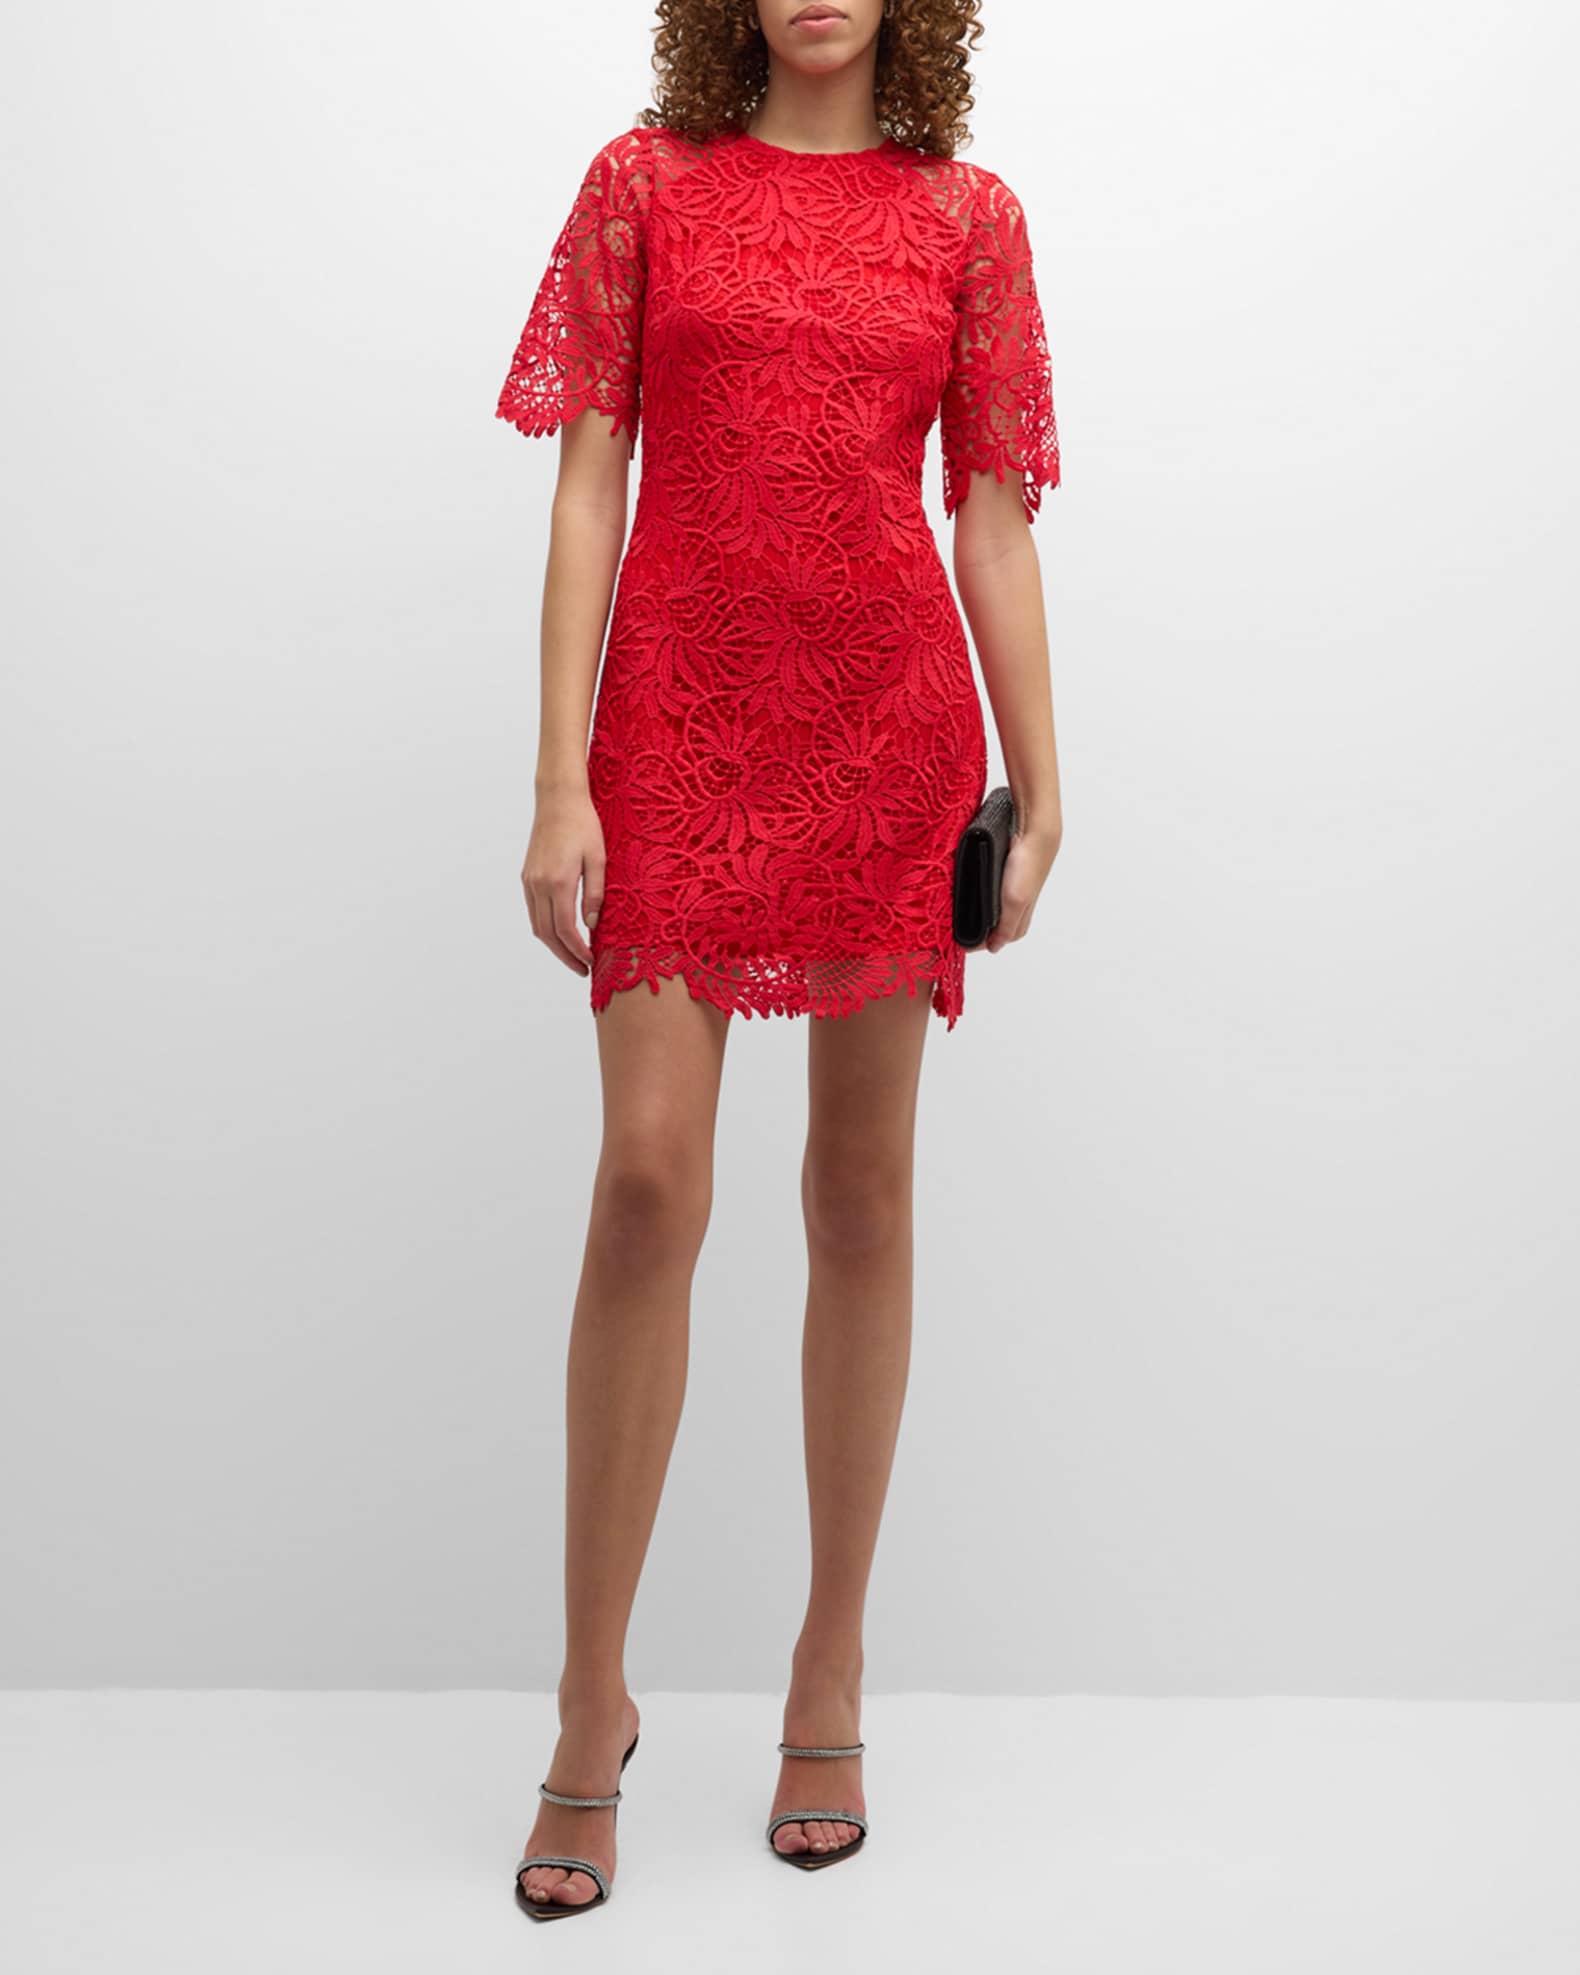 Louis Vuitton Scallop Detail A-Line Dress Bright Red. Size 40